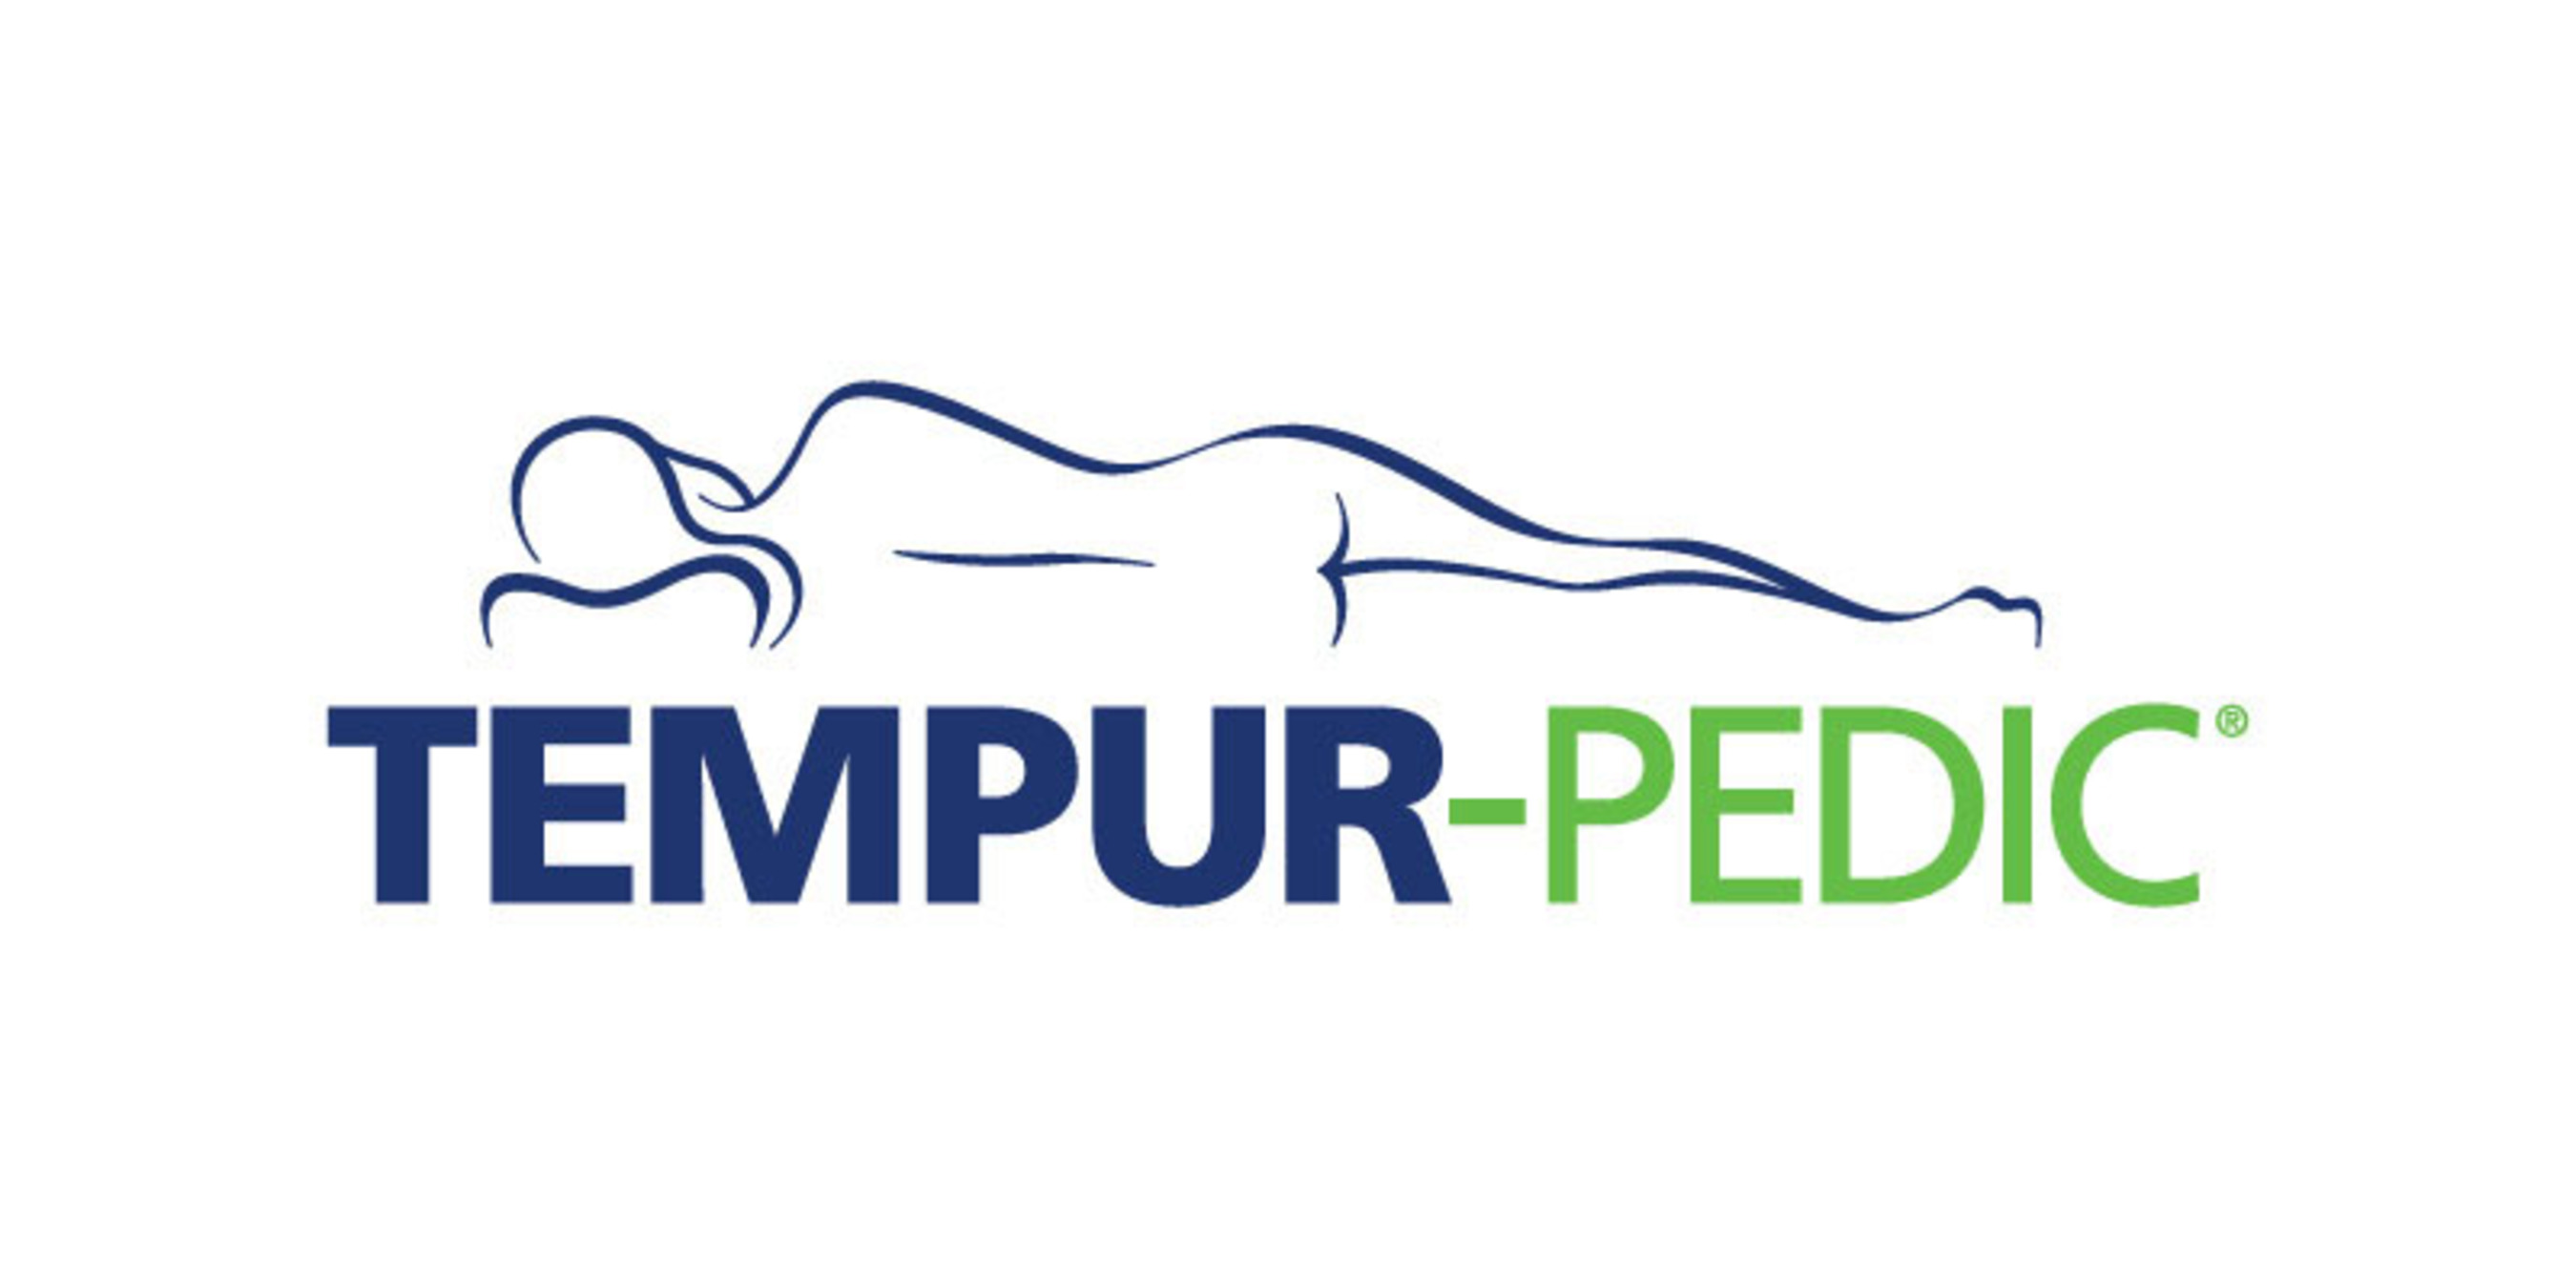 Tempur-Pedic logo (PRNewsFoto/Tempur Sealy International, Inc)